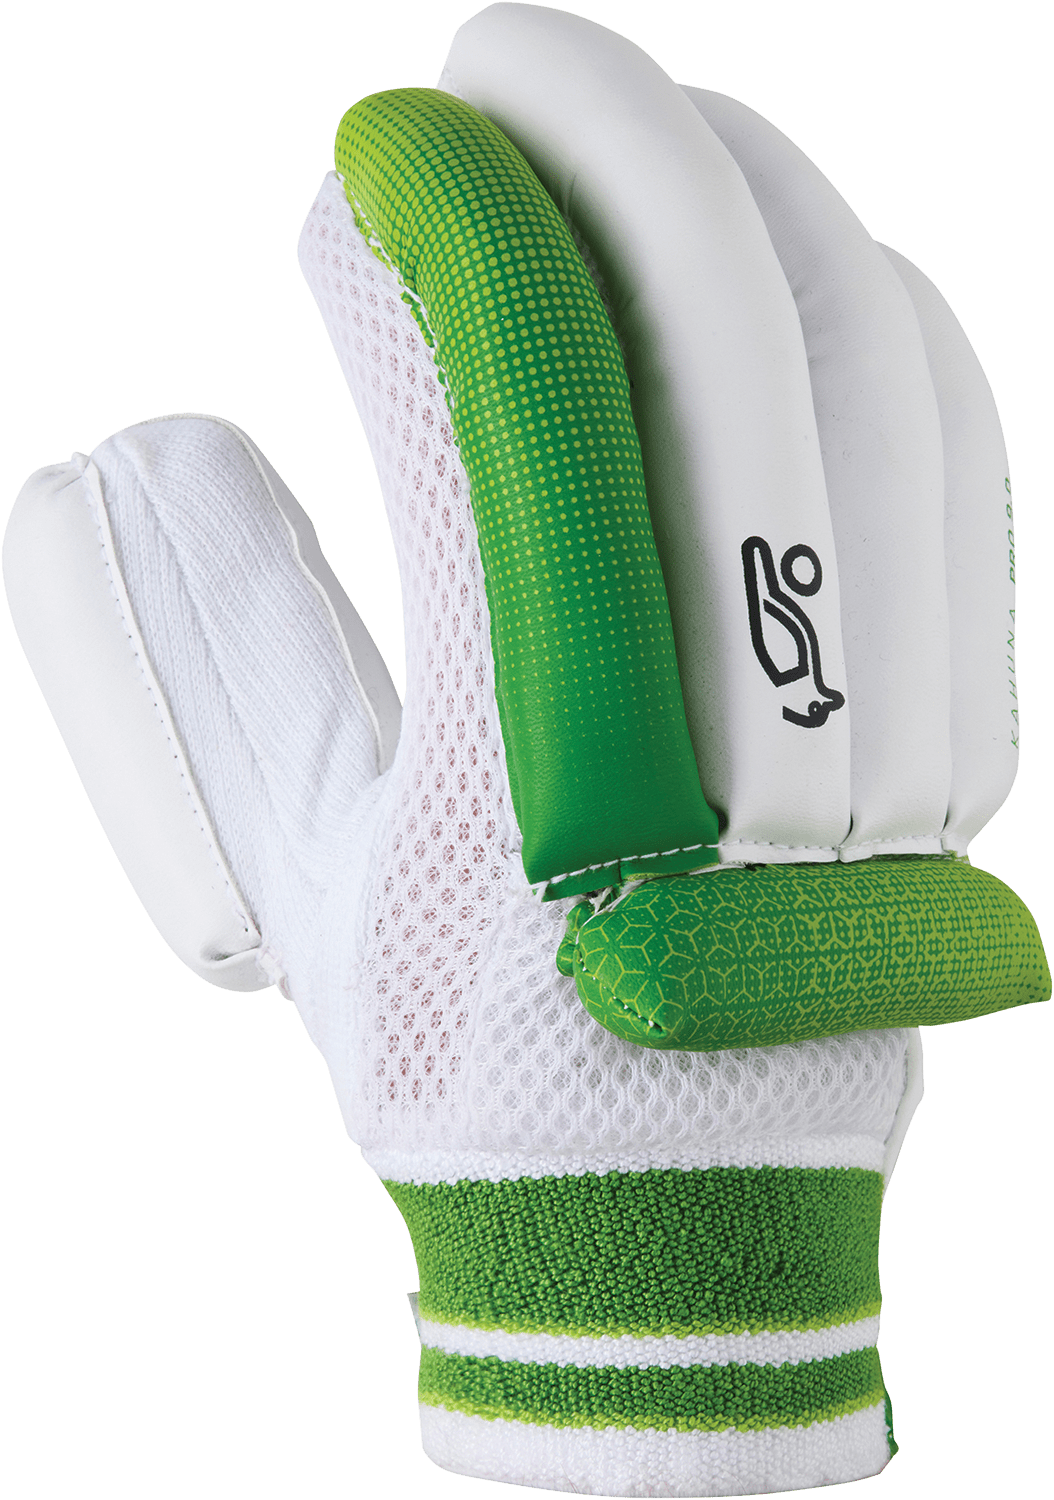 Kookaburra Gloves Kookaburra Kahuna Pro 9.0 Cricket Batting Gloves